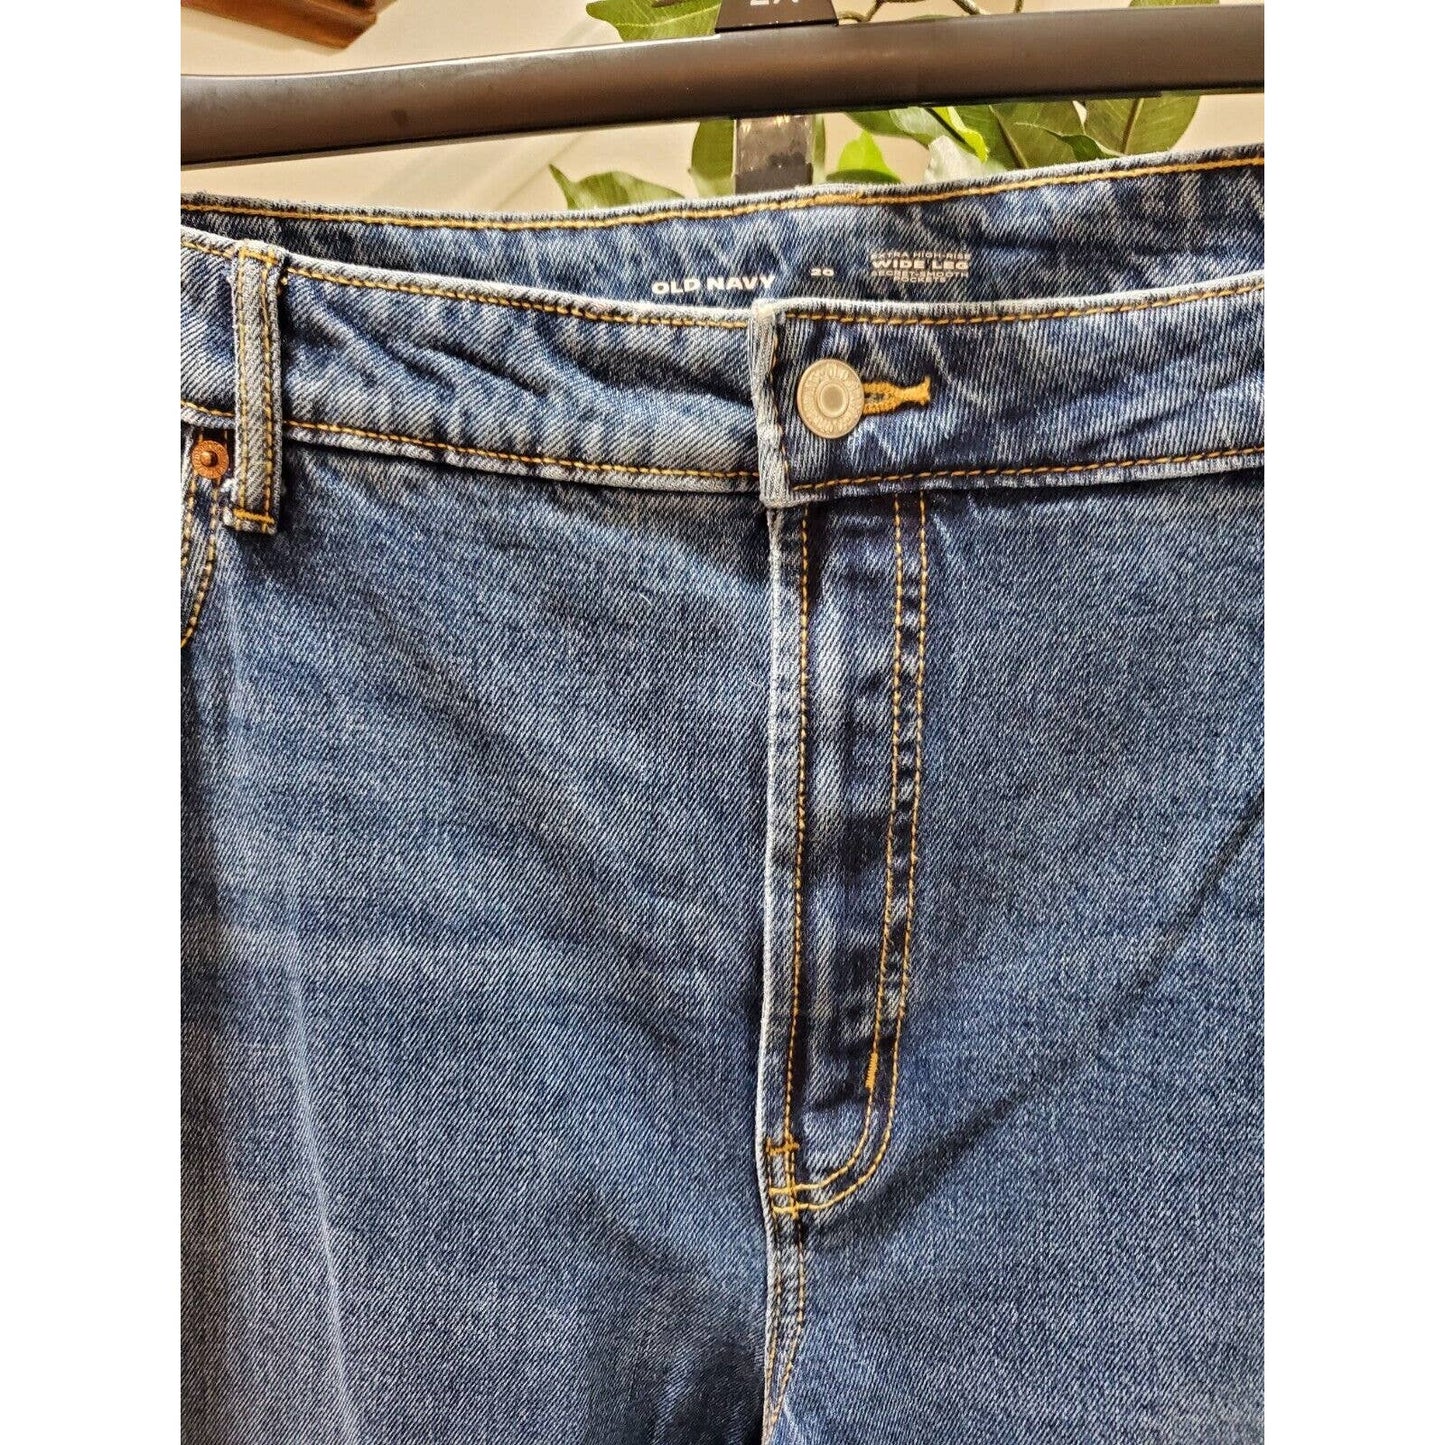 Old Navy Women's Blue Denim Cotton High Rise Wide Leg Zipper Jeans Pant Size 20